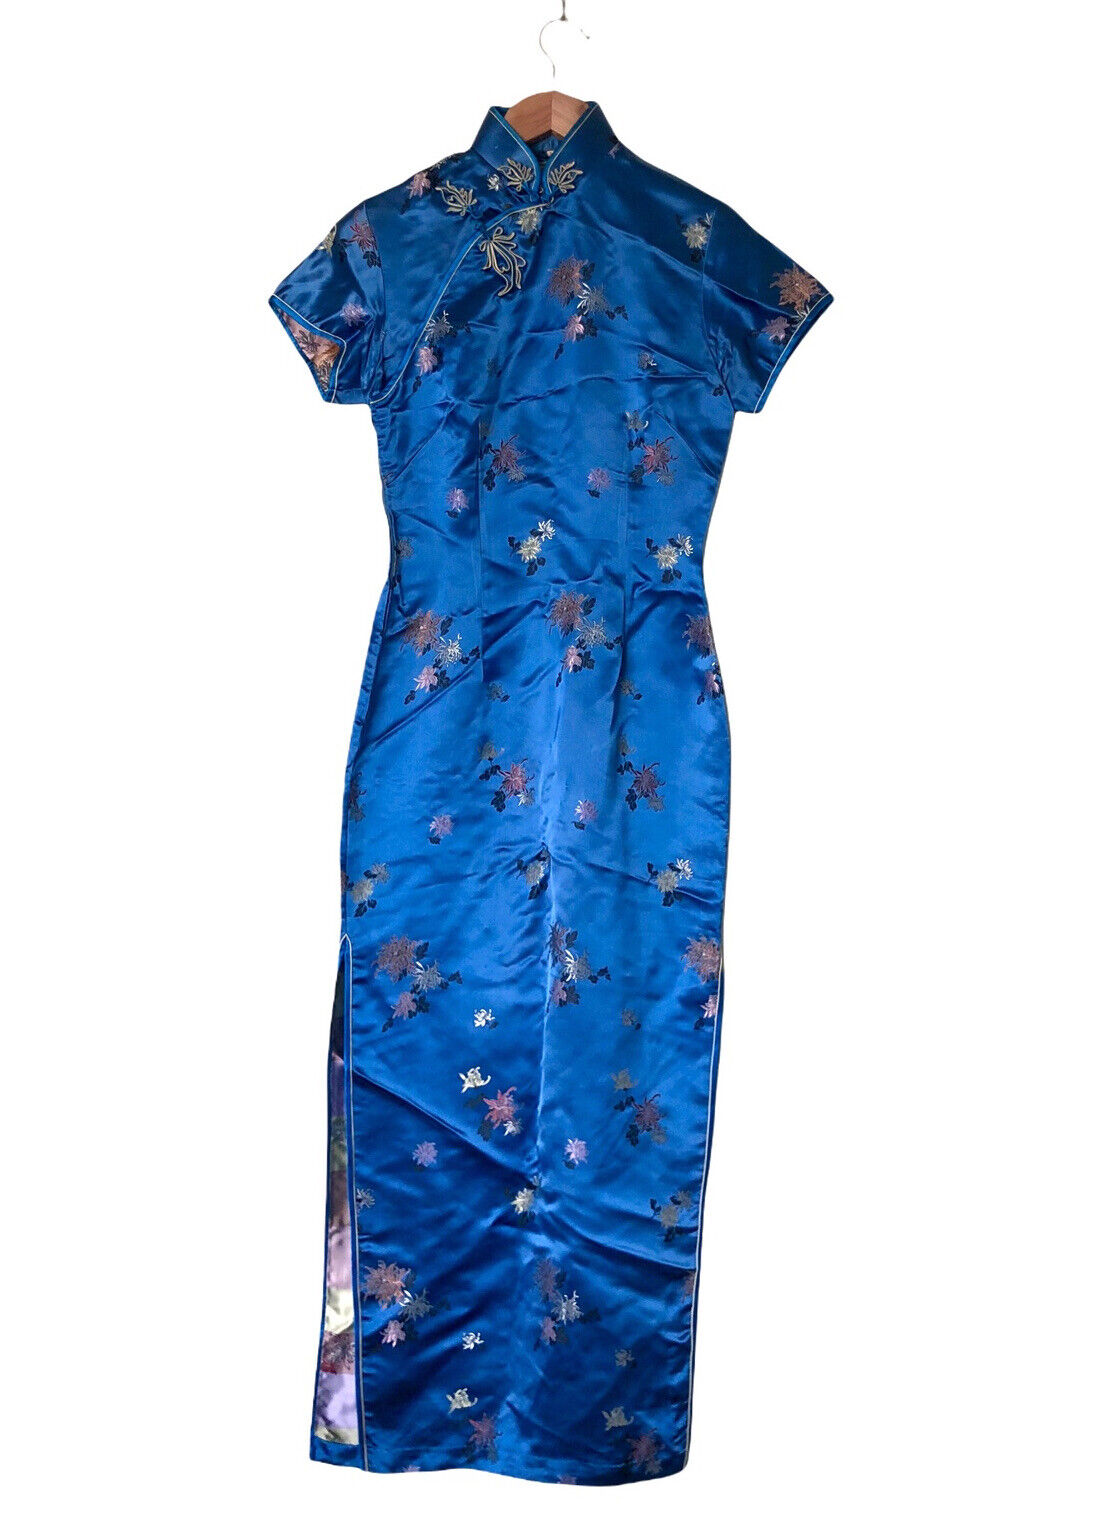 Vtg Chinese Blue Satin Cheongsam Dress Asian Oriental Floral Contrast Sz 34